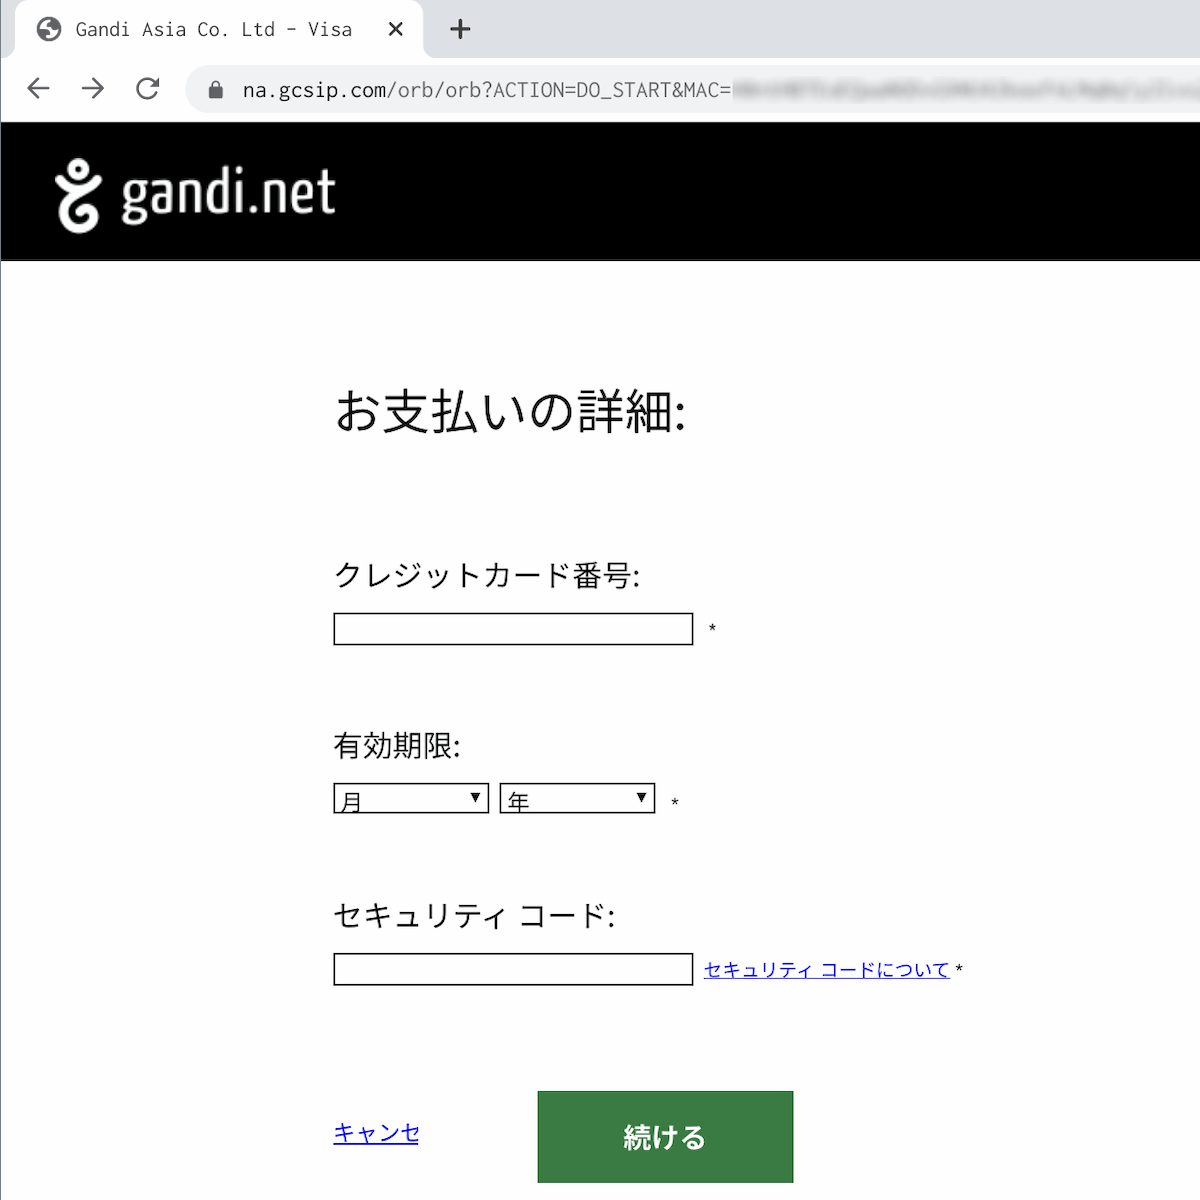 na.gcsip.comってドメインのサイト。gandi.netのロゴとものすごく簡素な入力フォームがあるだけ。